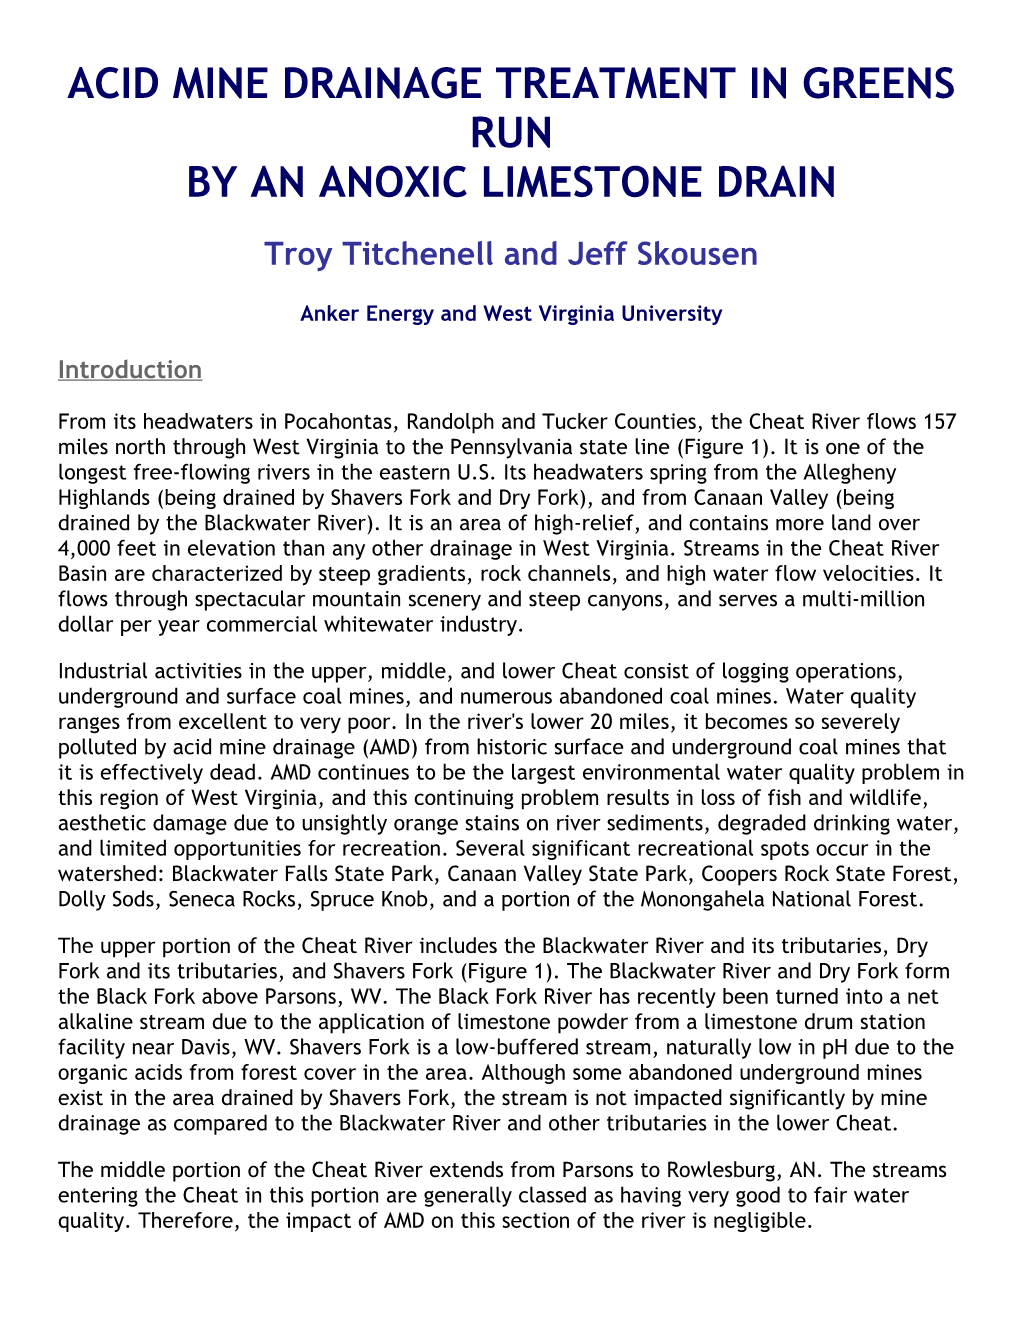 Acid Mine Drainage Treatment in Greens Run by an Anoxic Limestone Drain